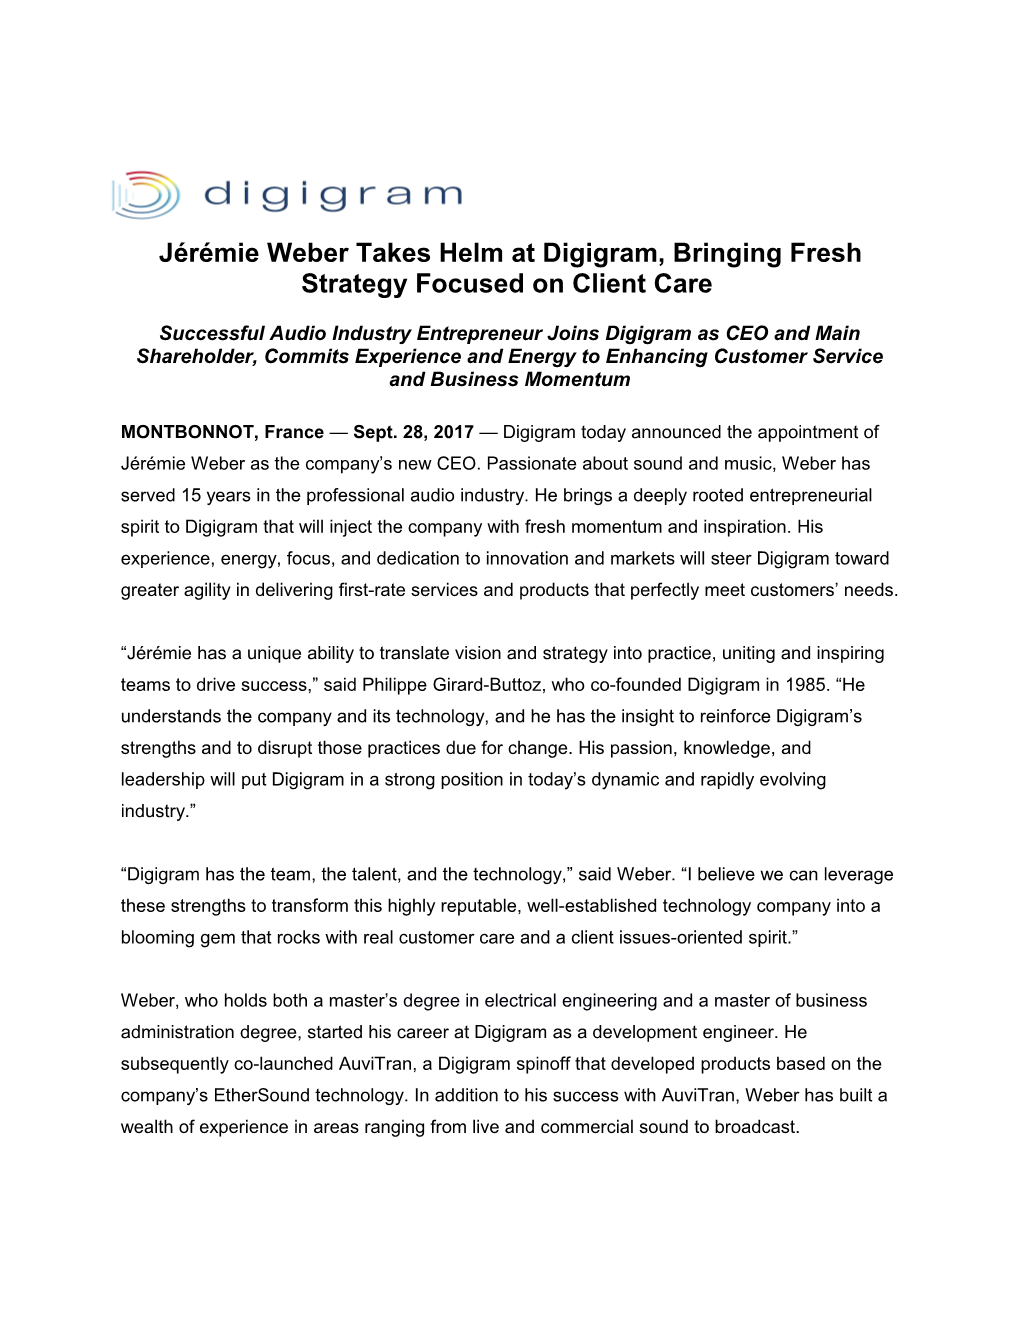 Digigram Press Release